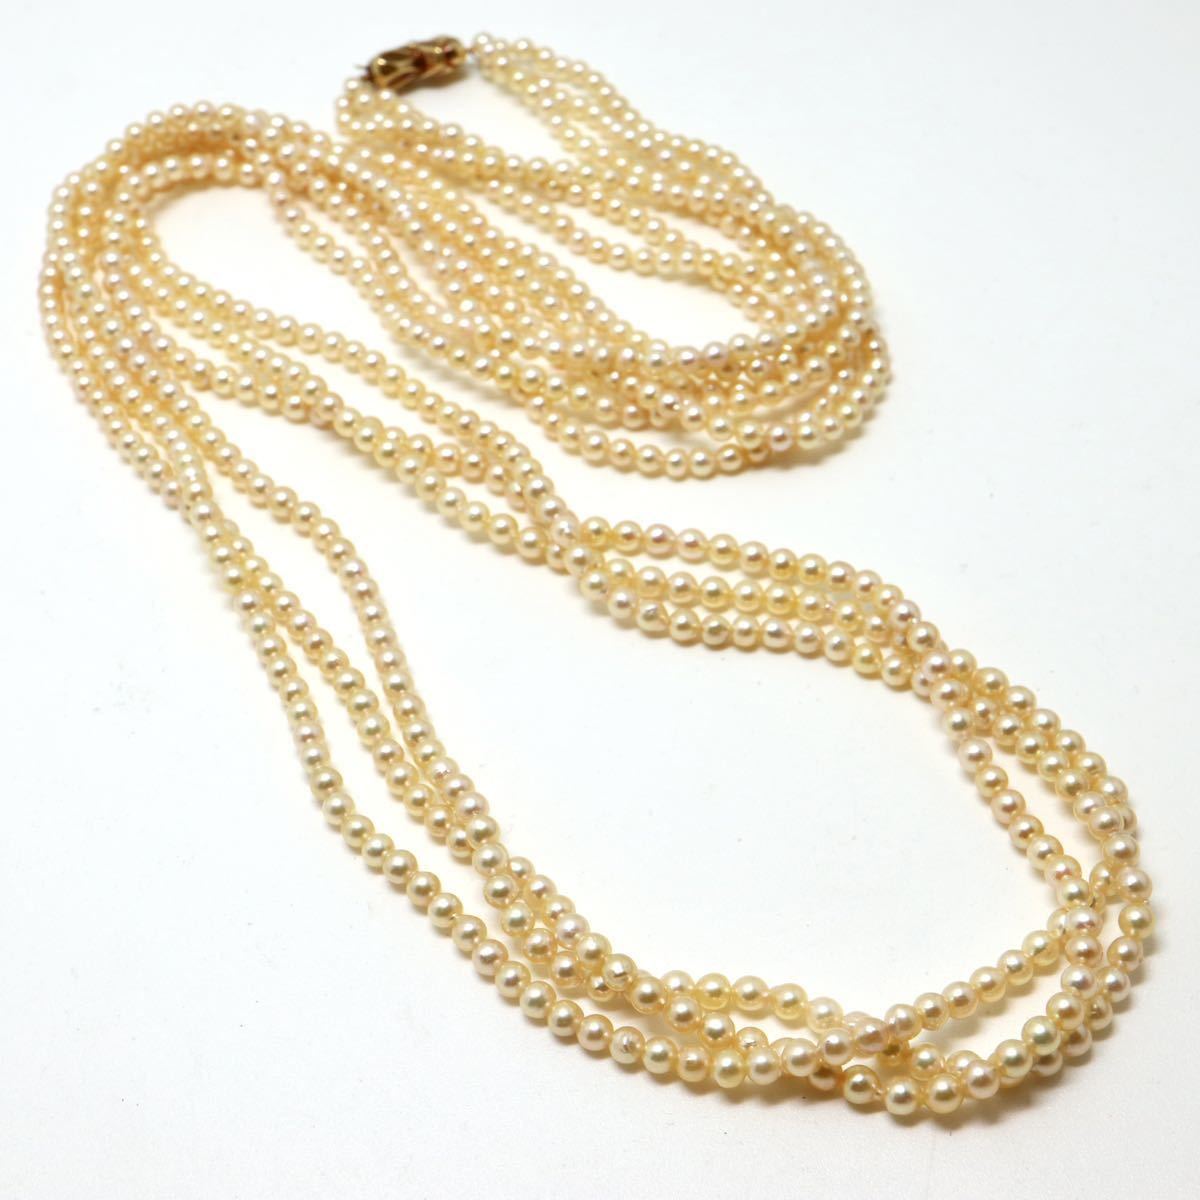 《K18(750)天然ダイヤモンド付きアコヤ本真珠ベビーパール3連ネックレス》J 3.5-4.0mm珠 56.5g 92.5cm pearl necklace jewelry EB1/EE1_画像5